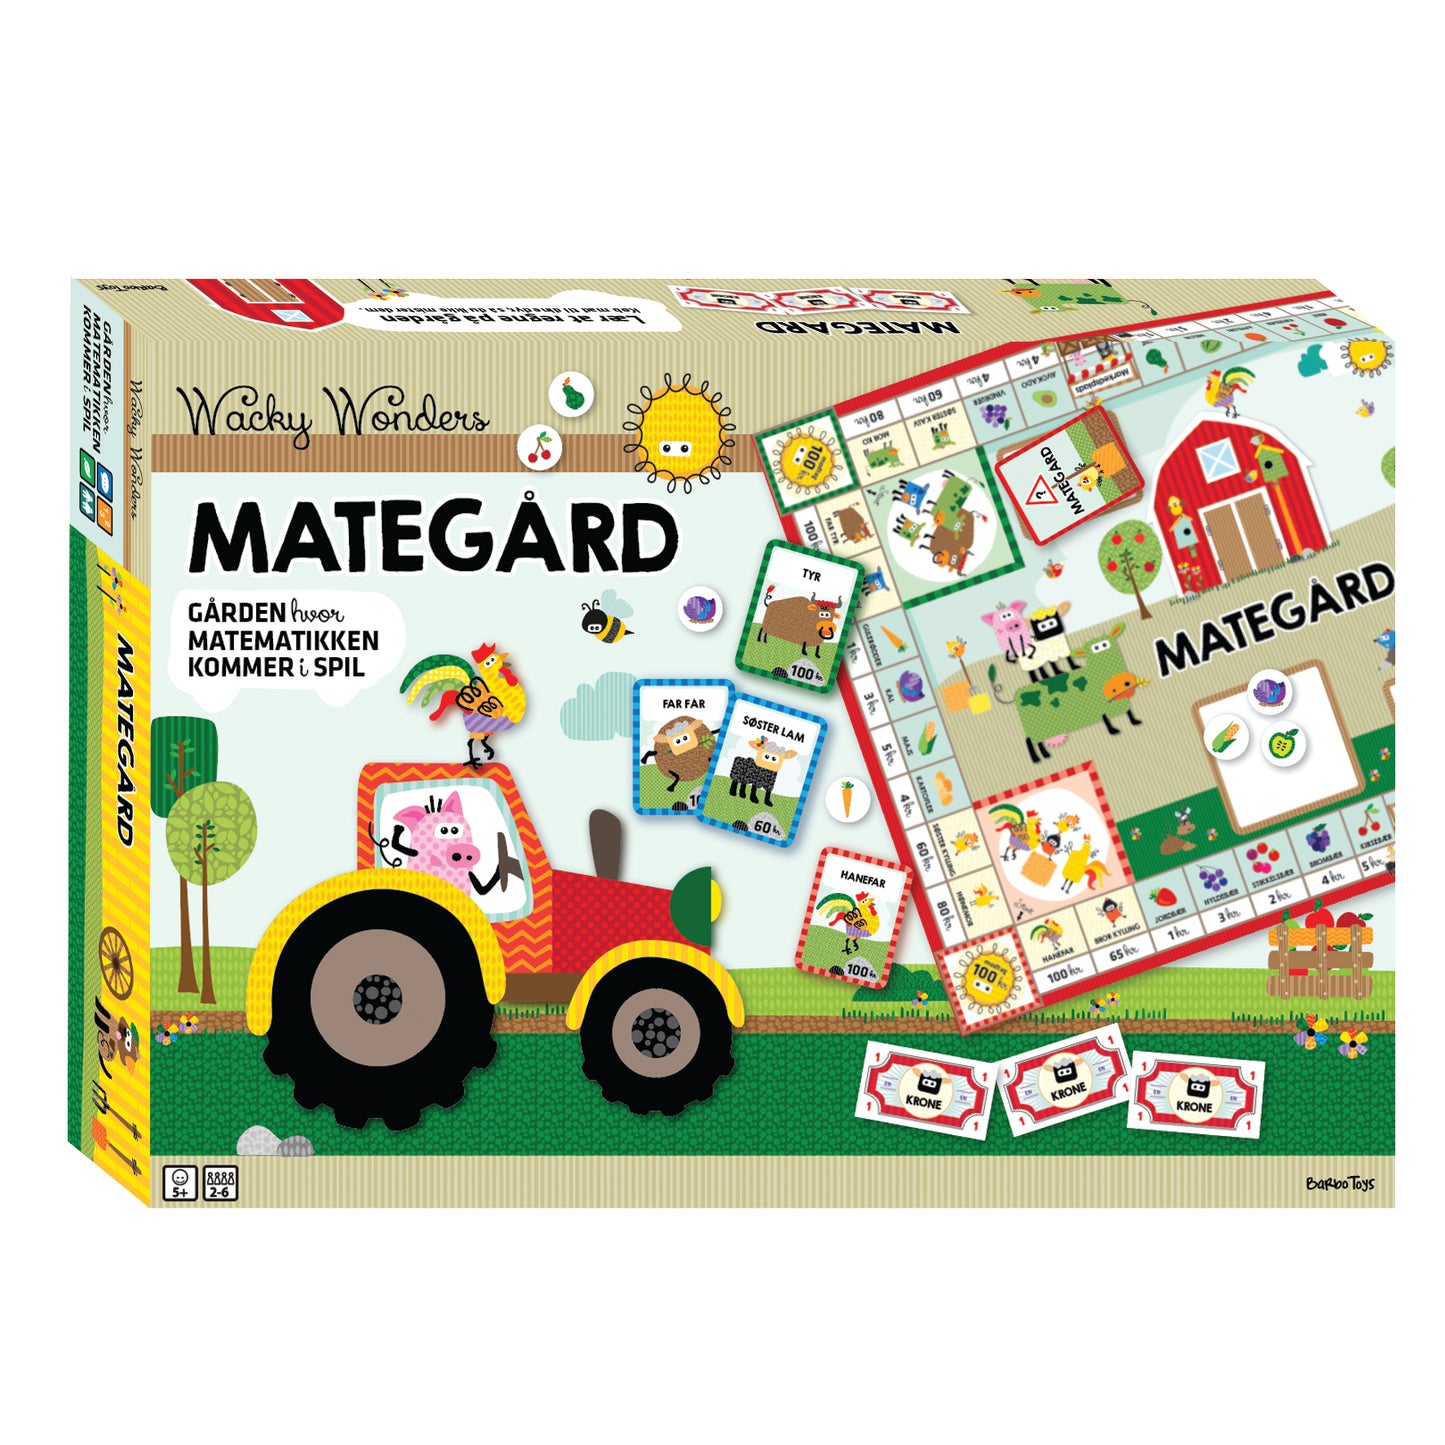 Wacky Wonders - Mategård Board Game - DK